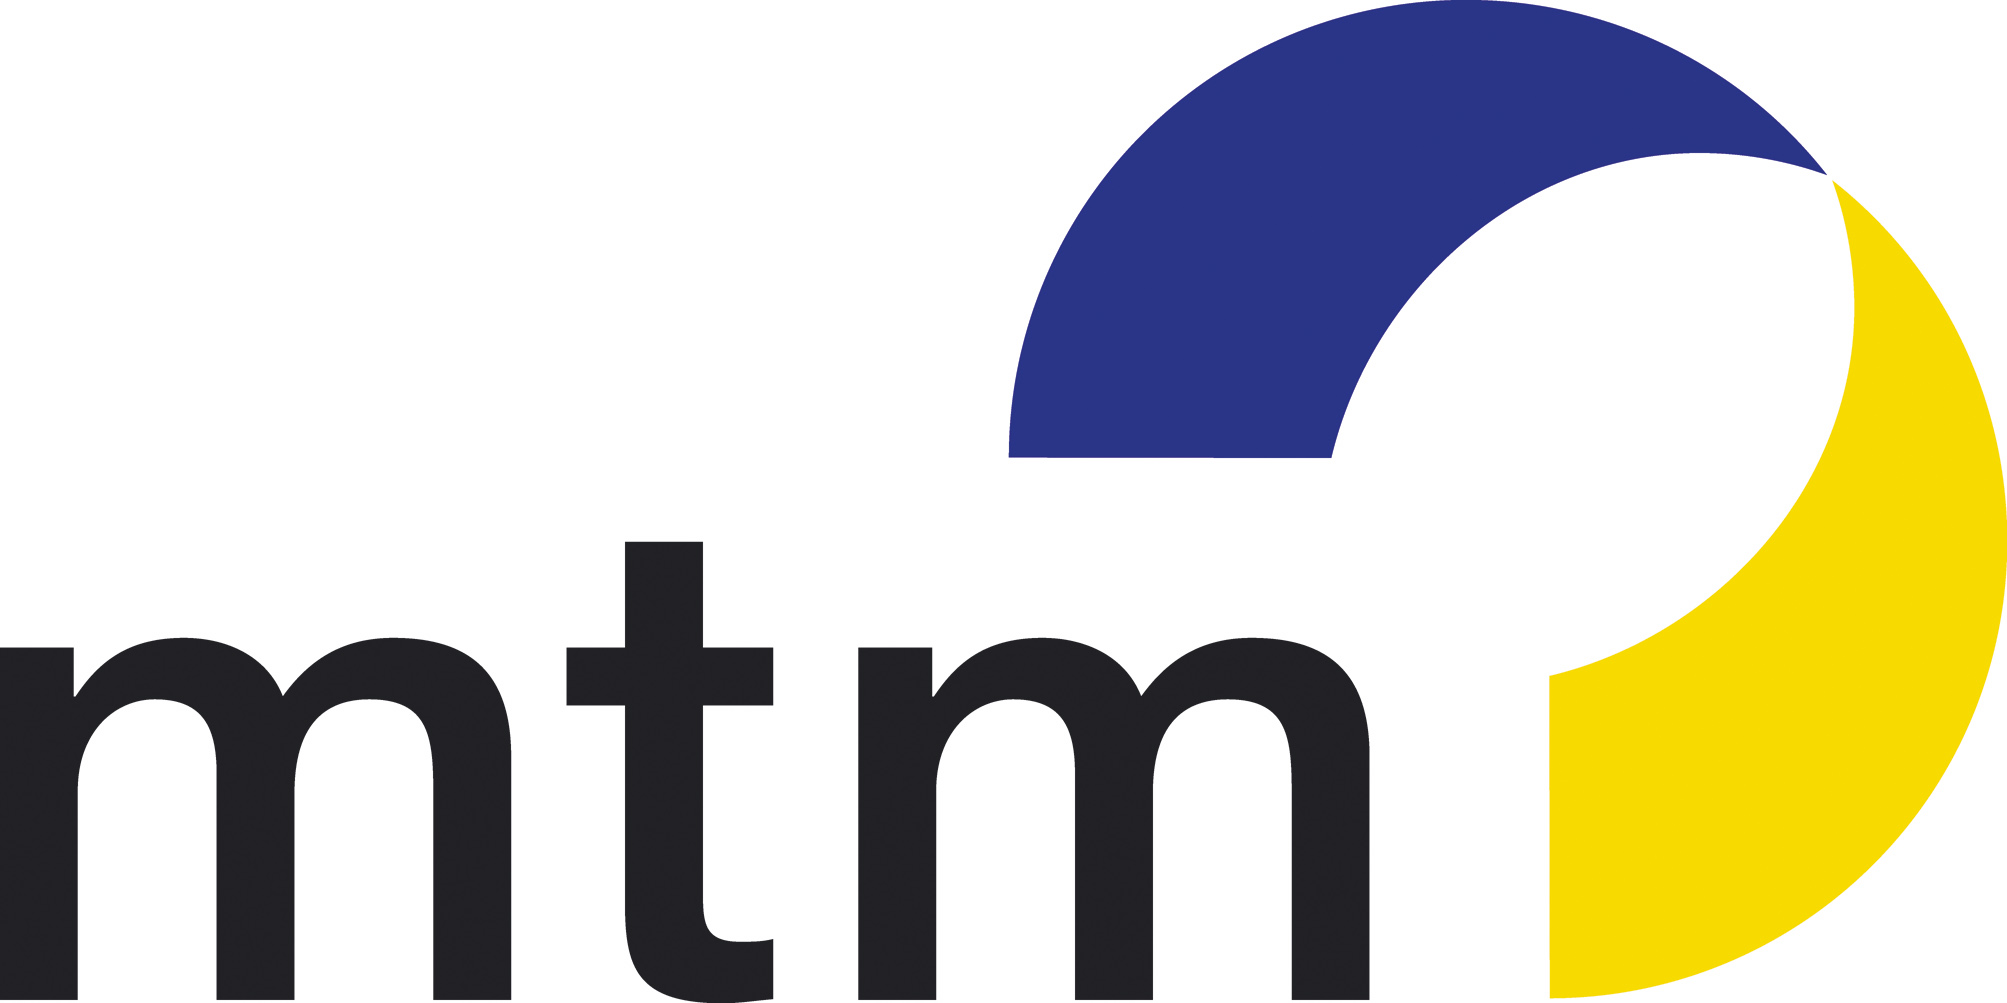 logo of mtm